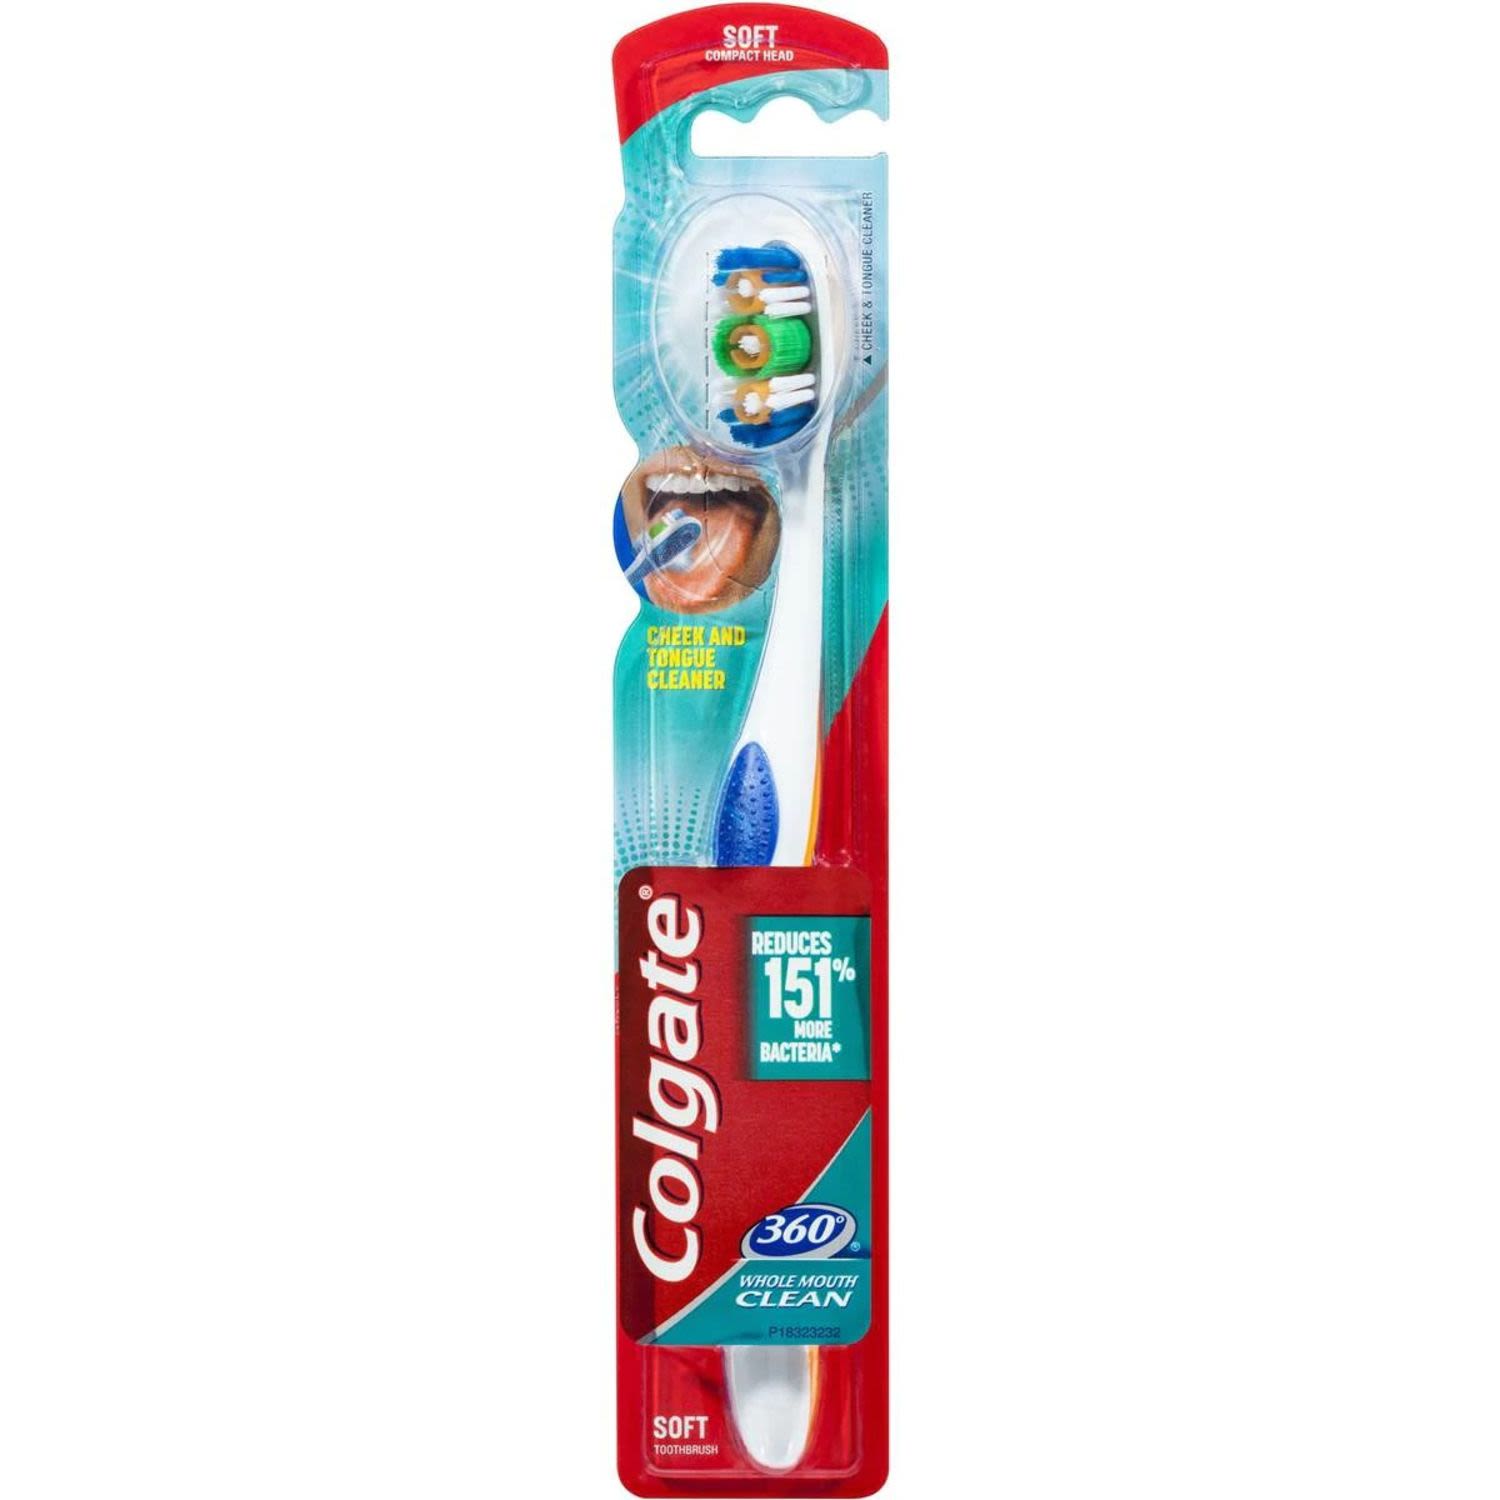 Colgate Toothbrush 360 Degrees Soft, 1 Each